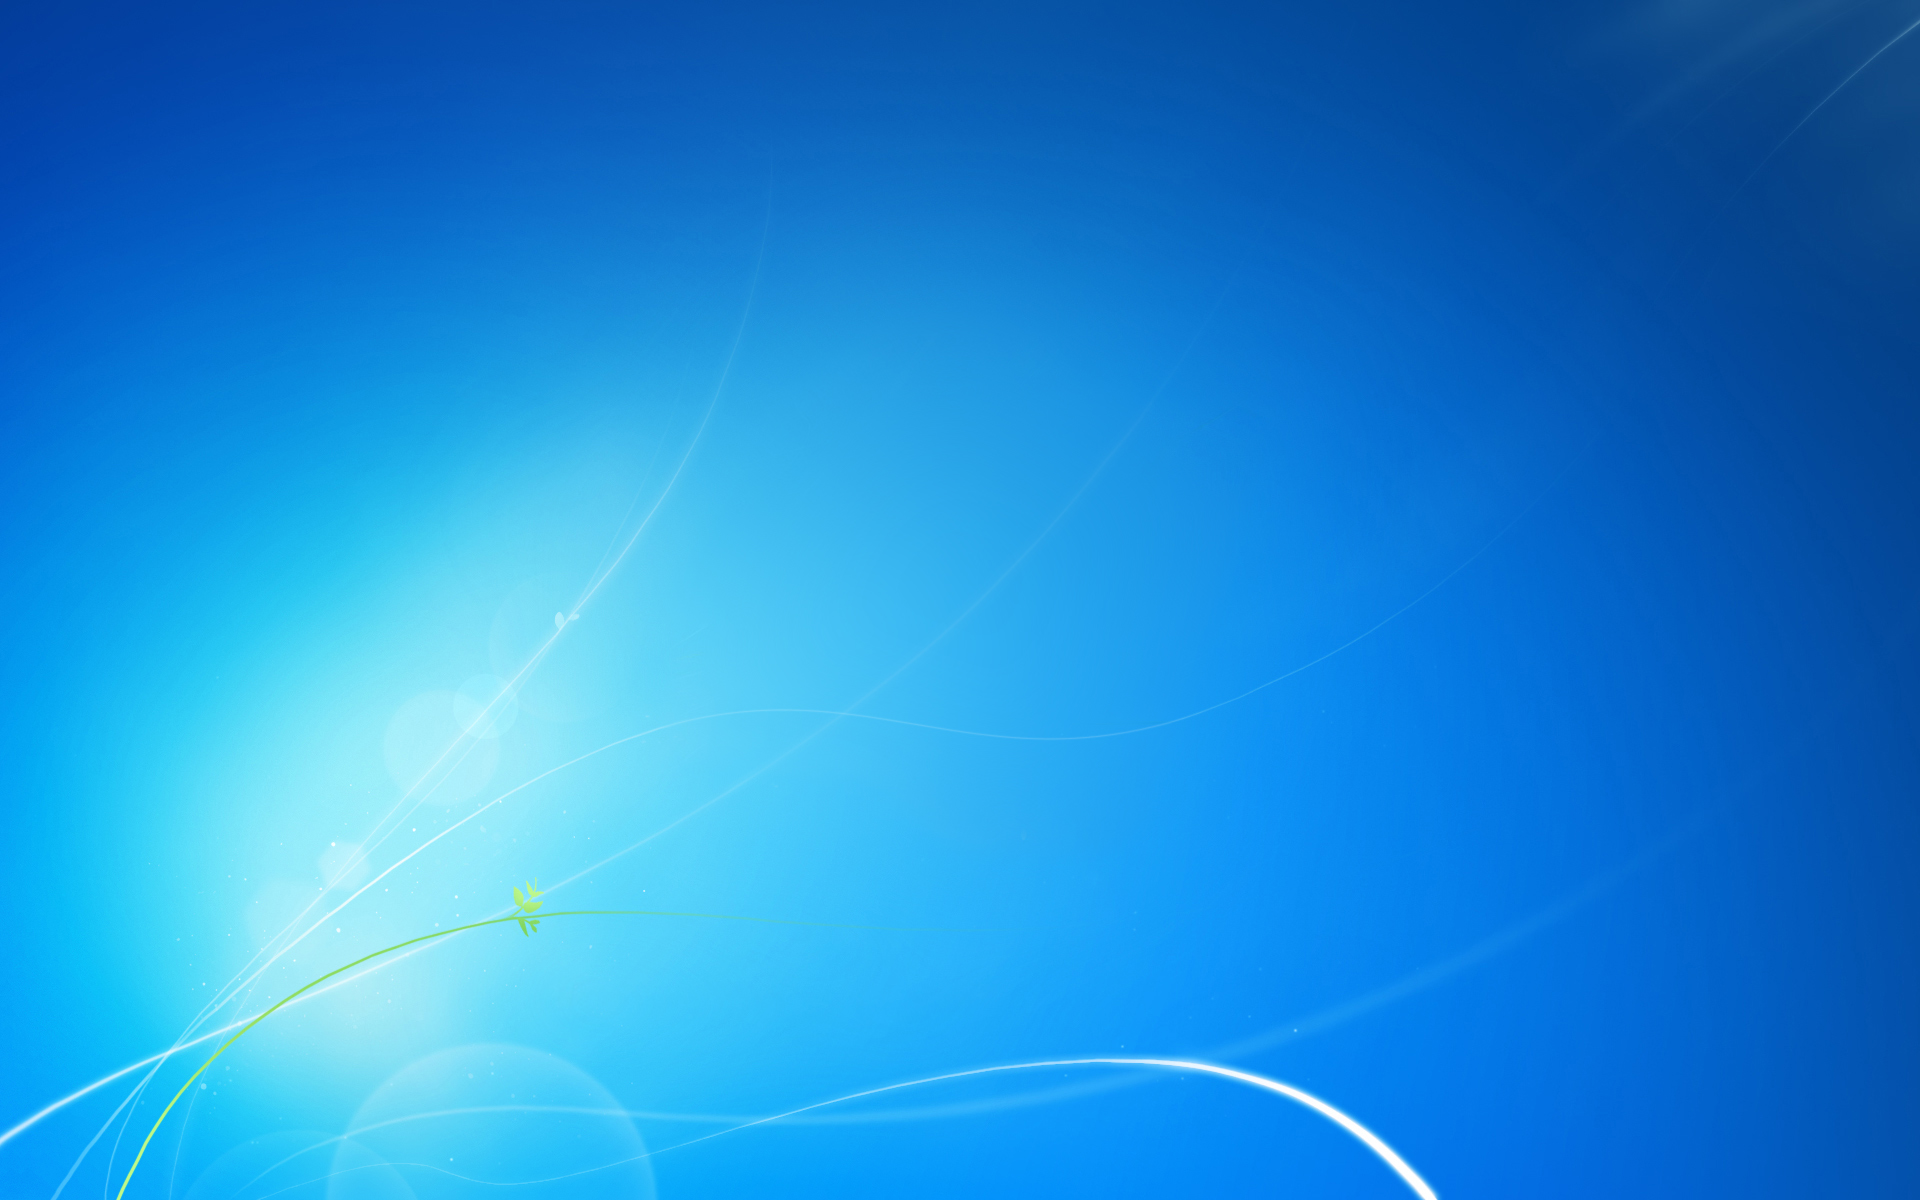 Windows Default Desktop Background Image Pictures Becuo